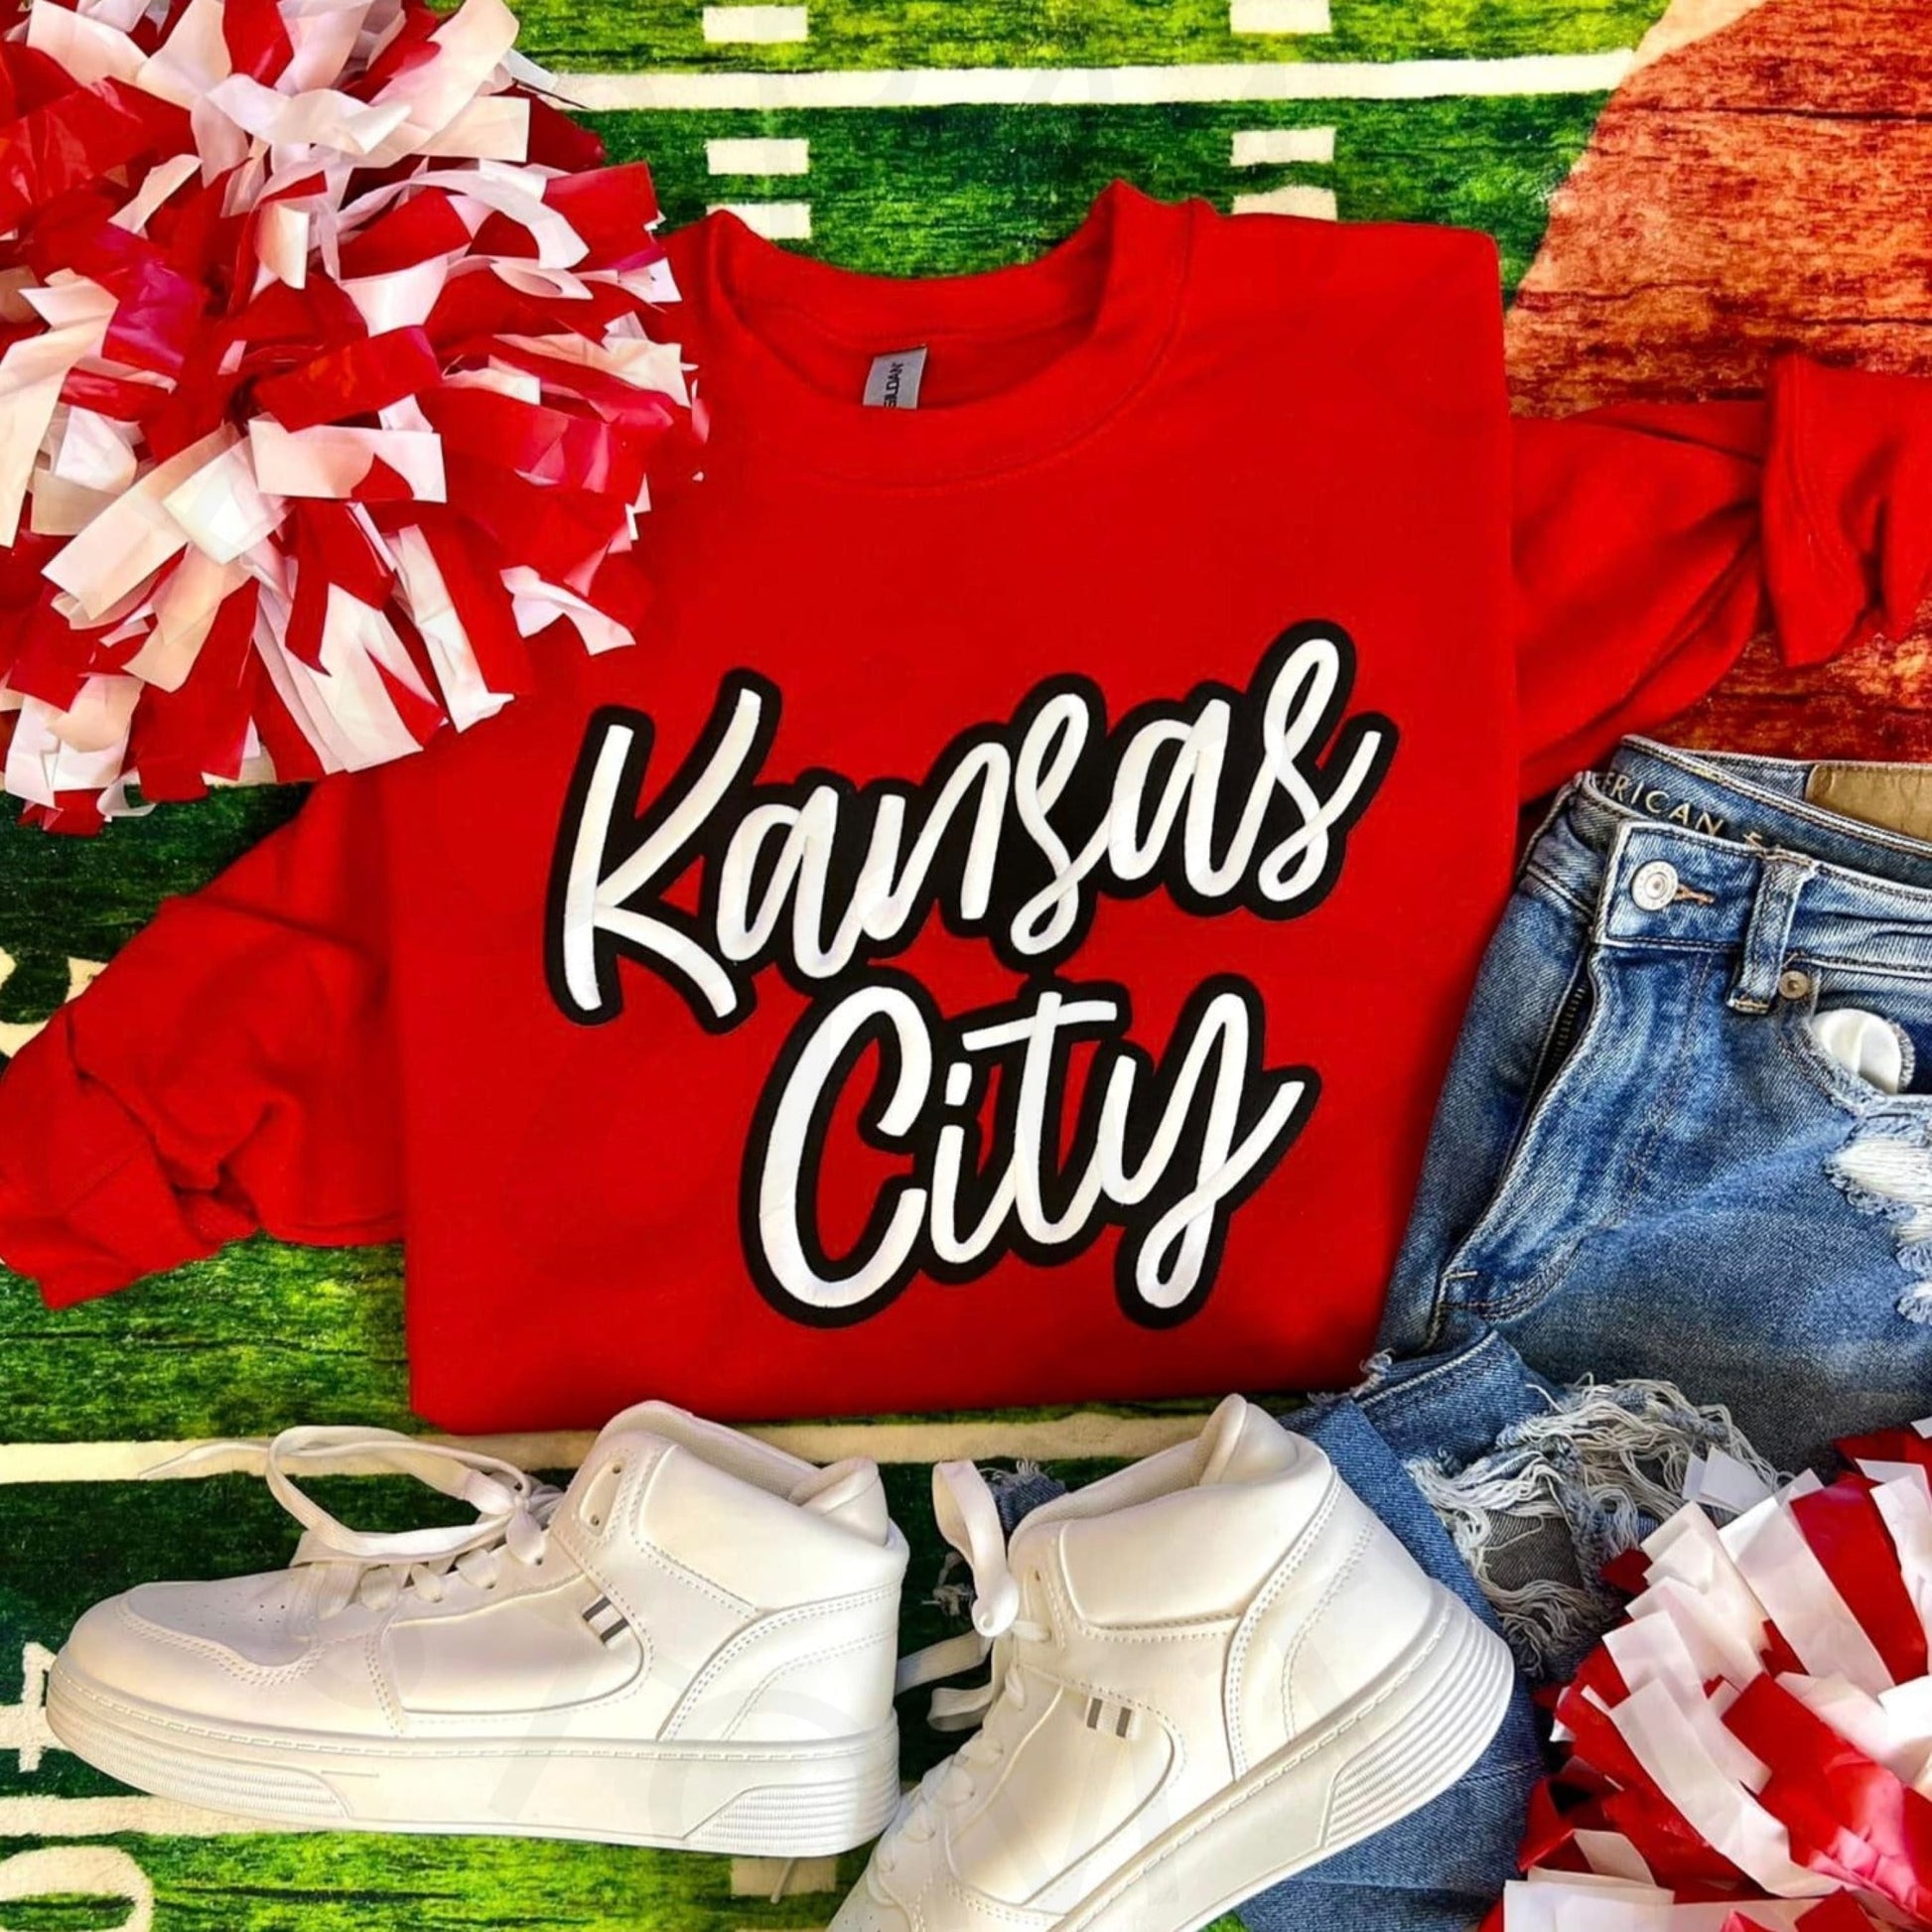 Kansas City Crew Sweatshirt